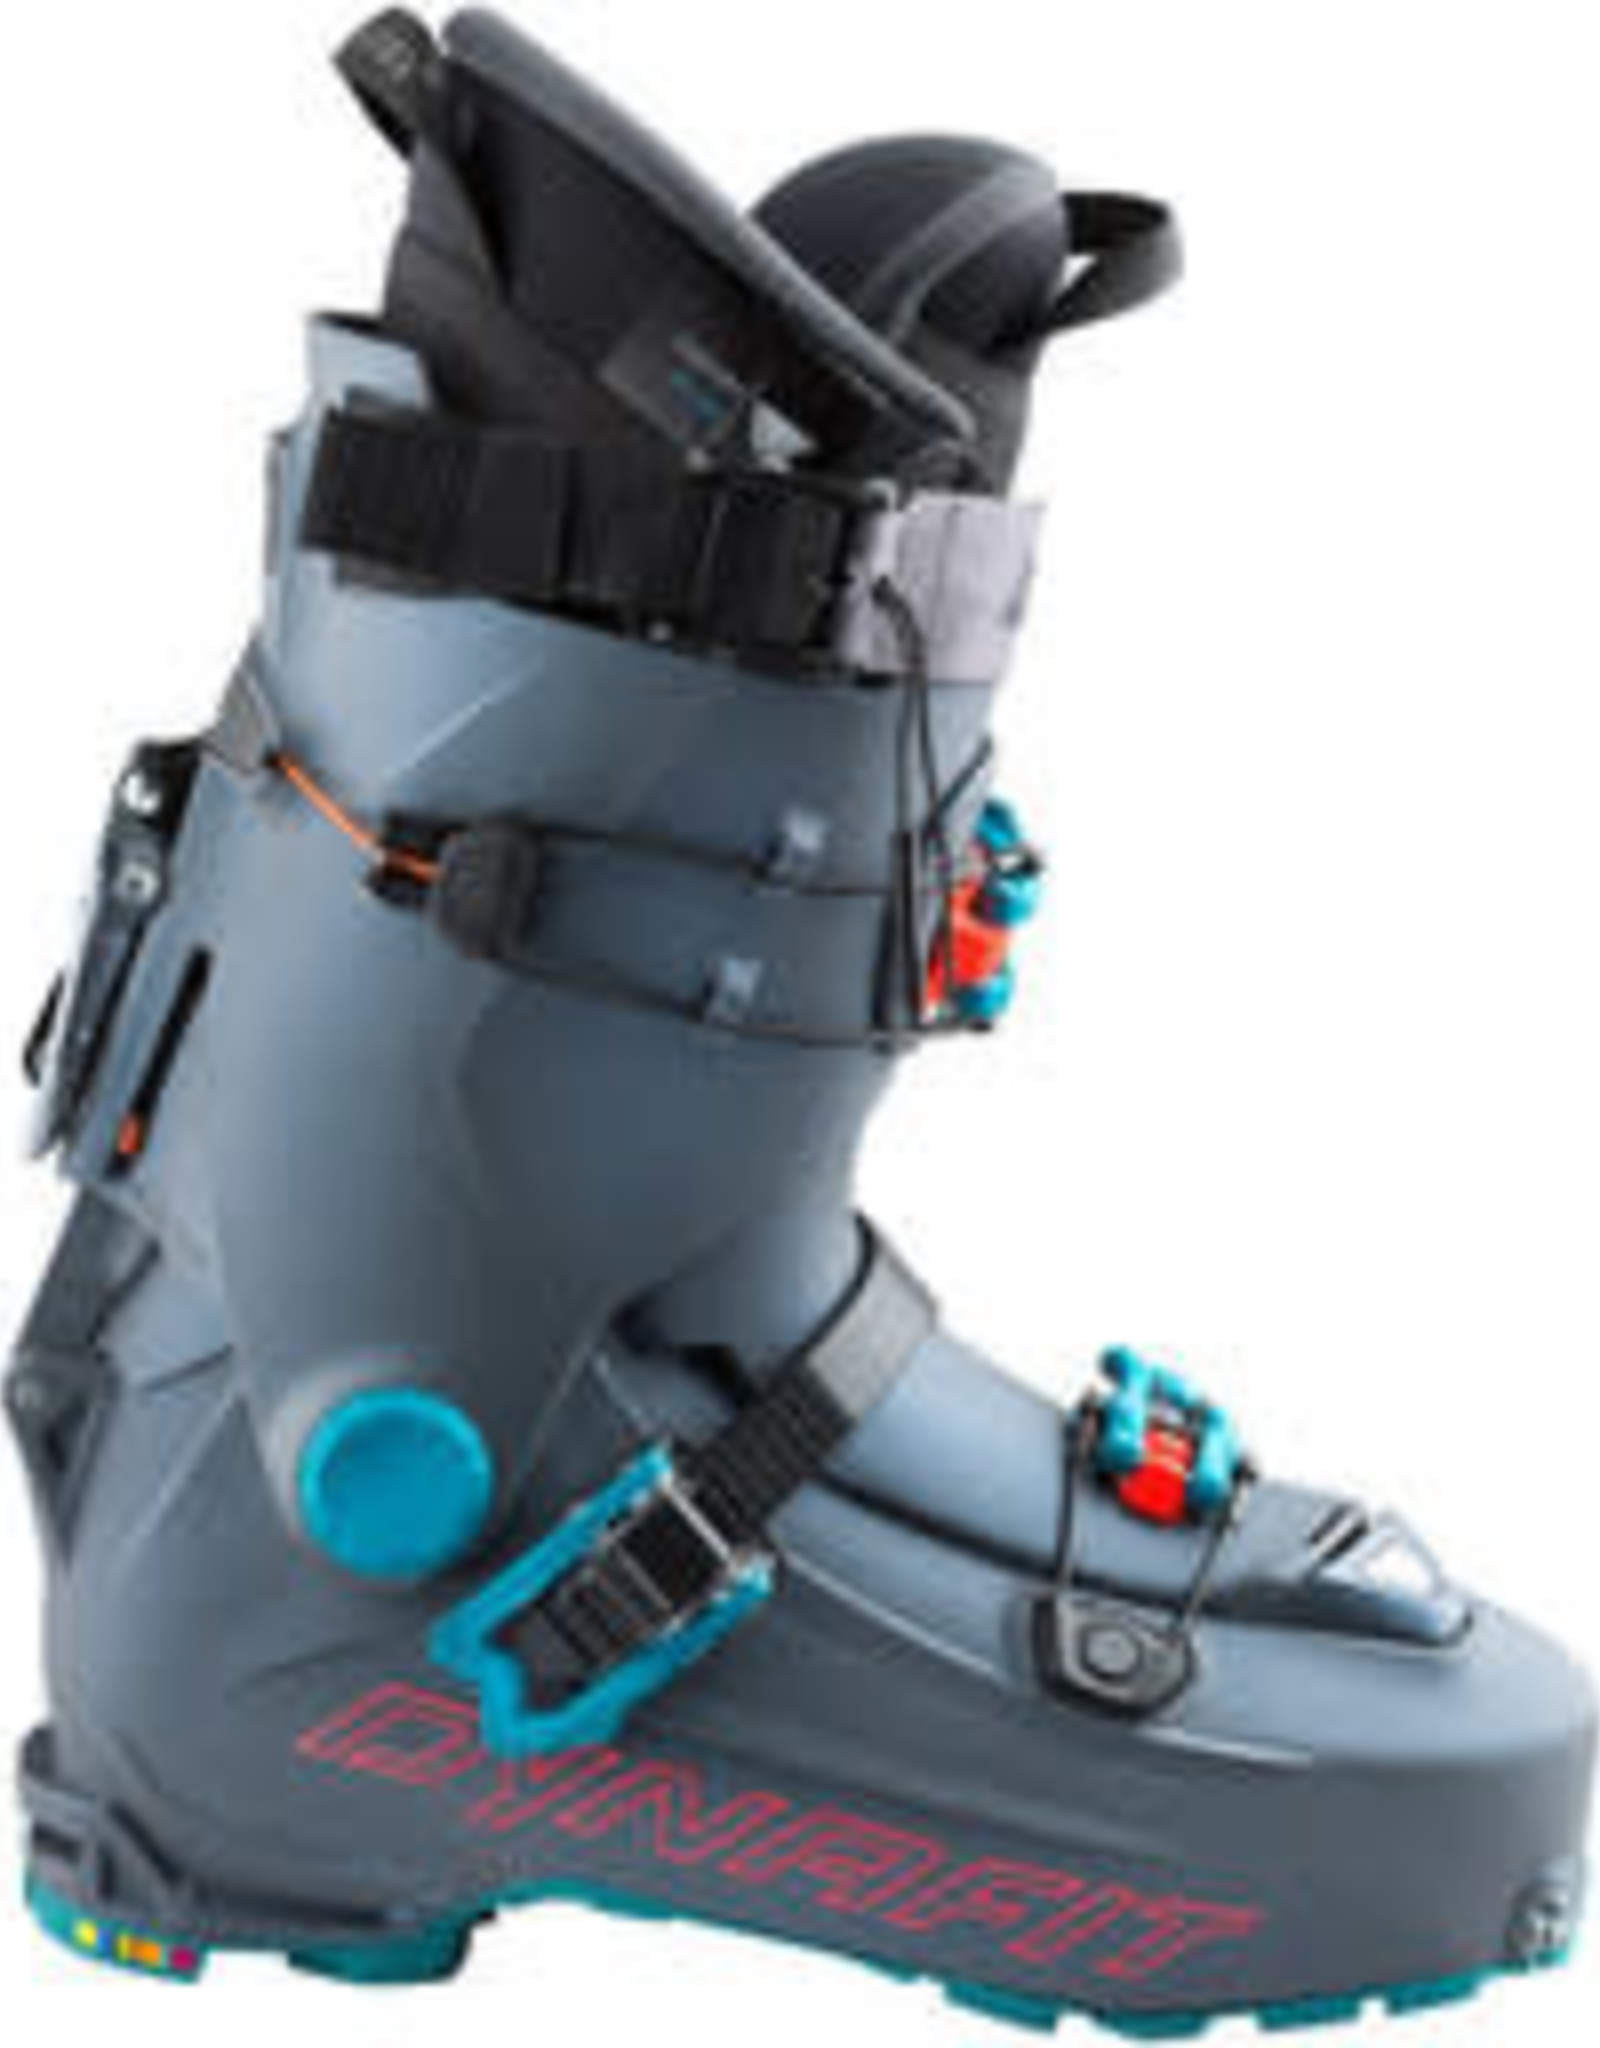 Dynafit Hoji Pro Tour AT Ski Boots